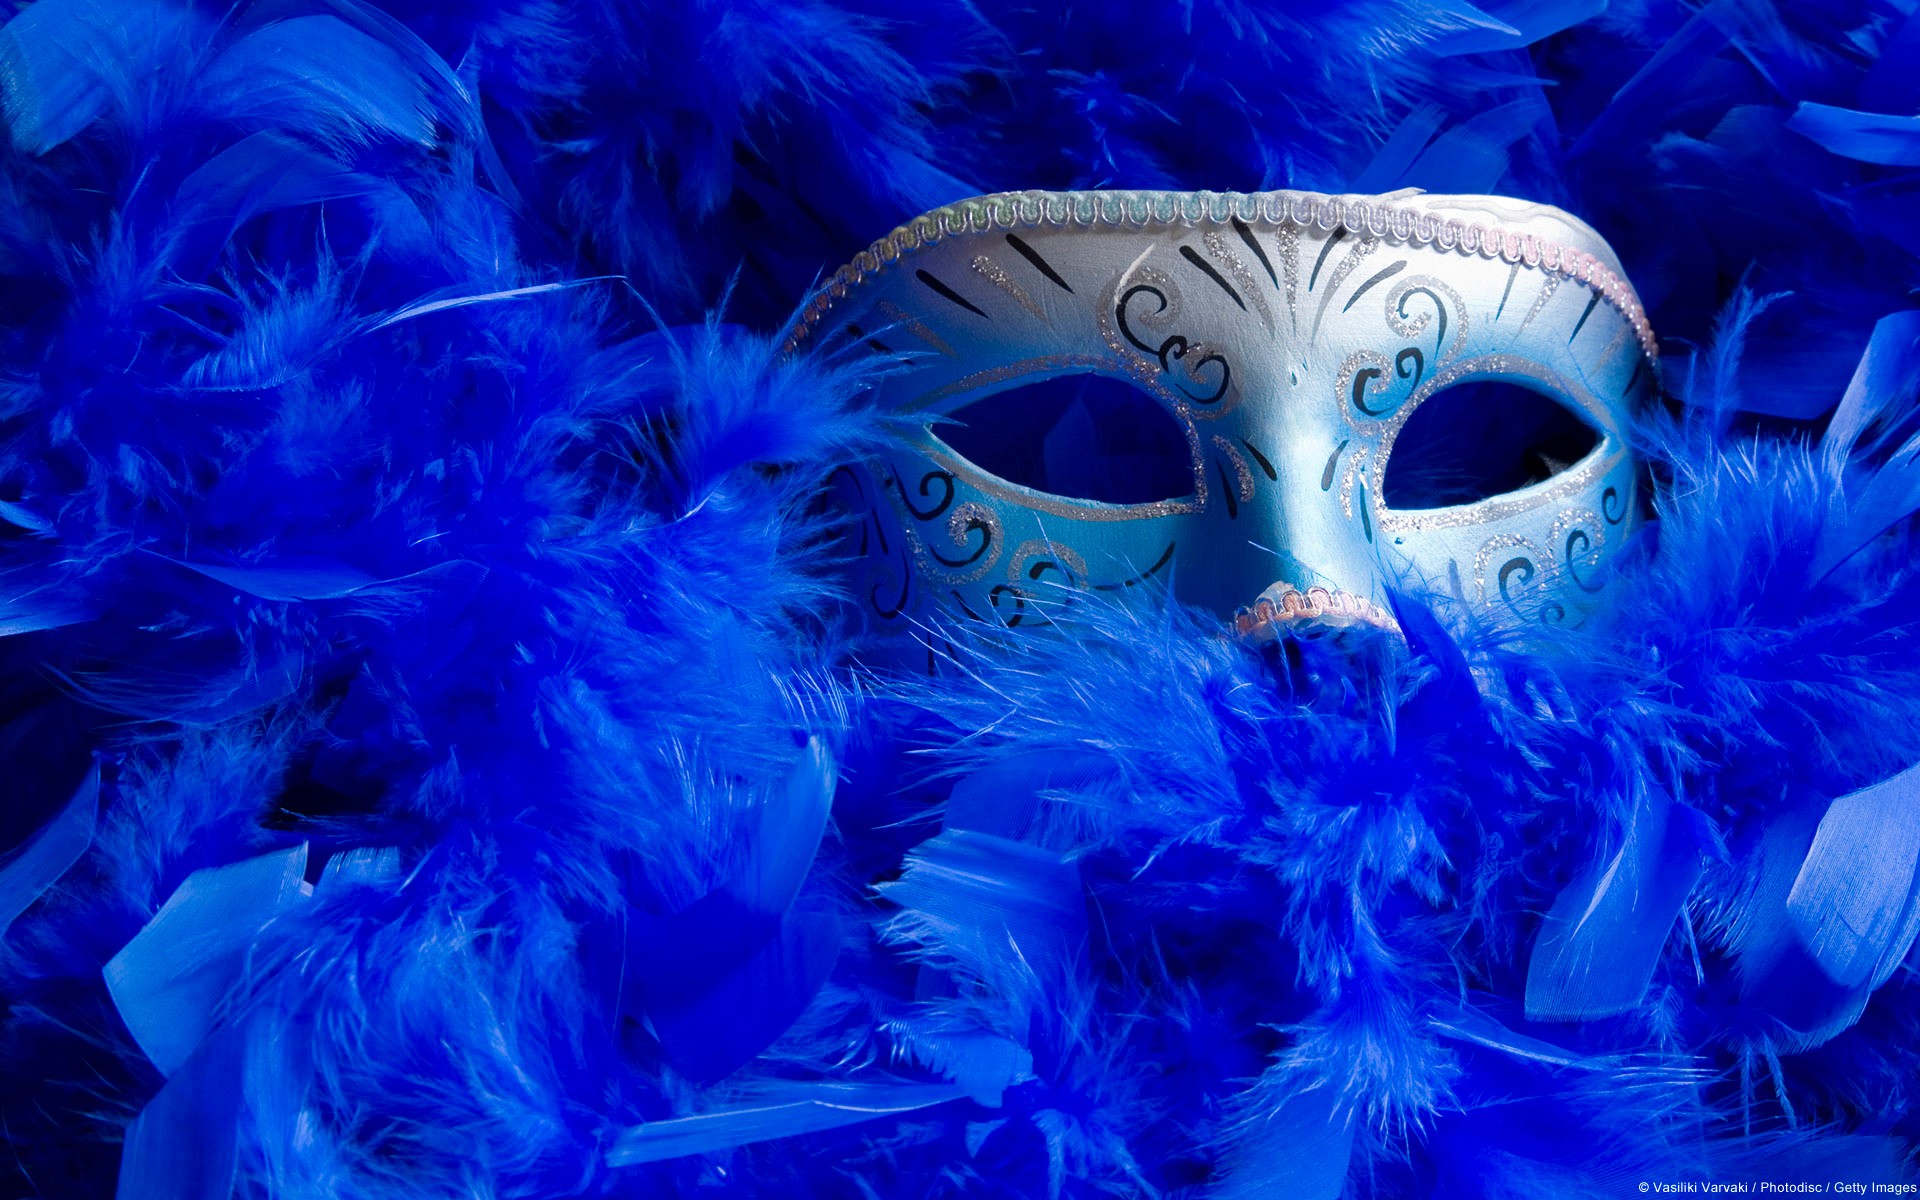 General 1920x1200 venetian masks feathers blue mask closeup watermarked